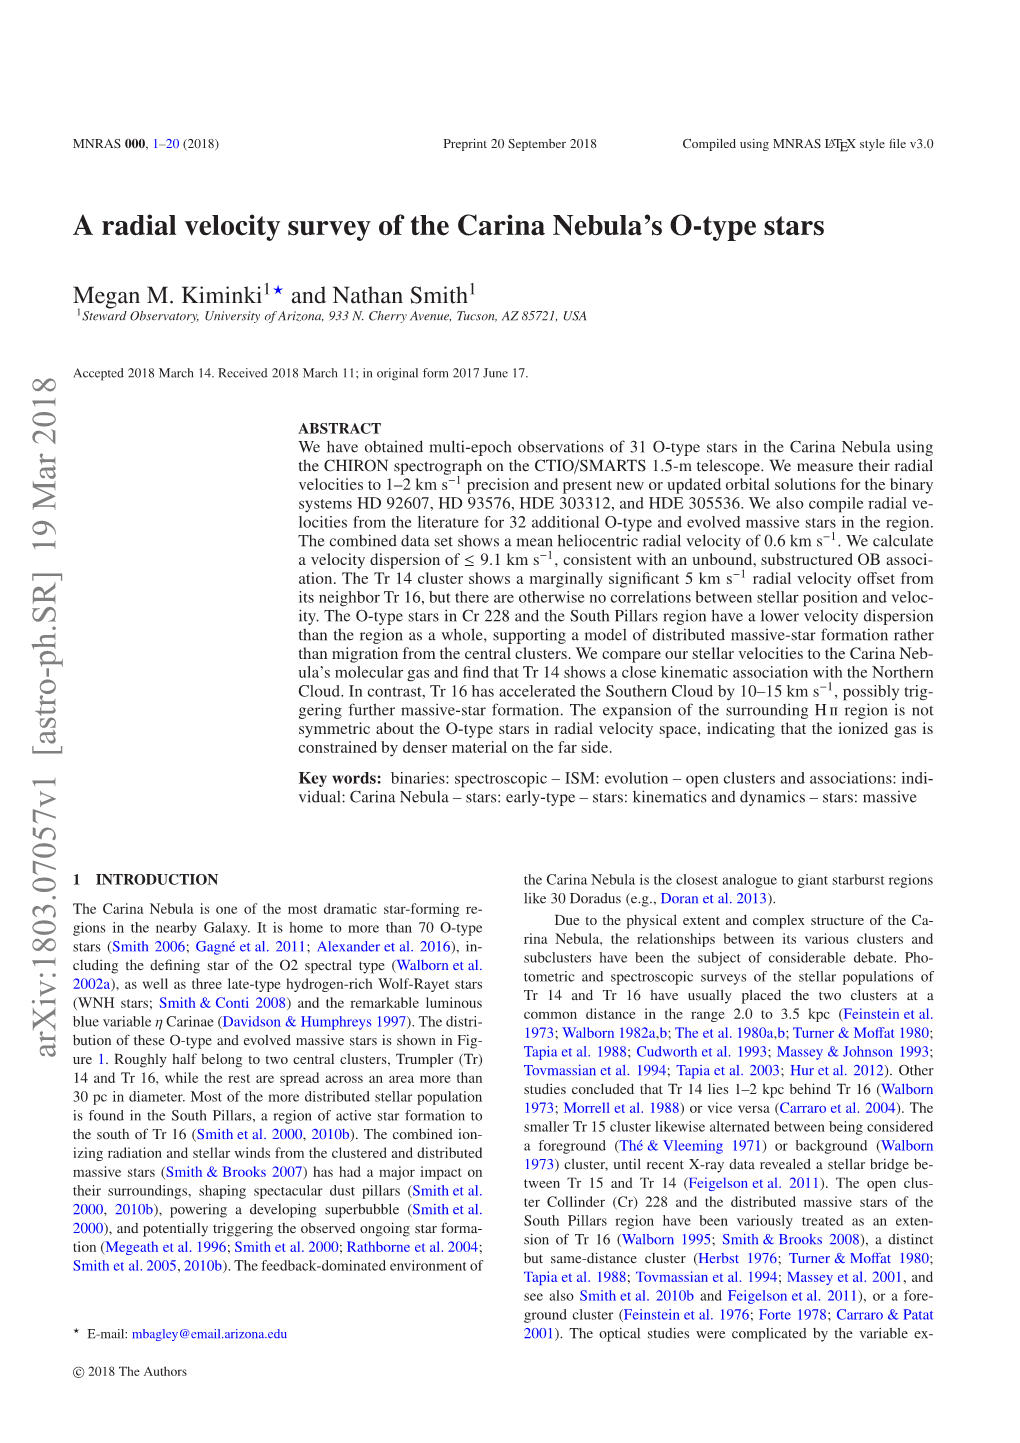 A Radial Velocity Survey of the Carina Nebula's O-Type Stars